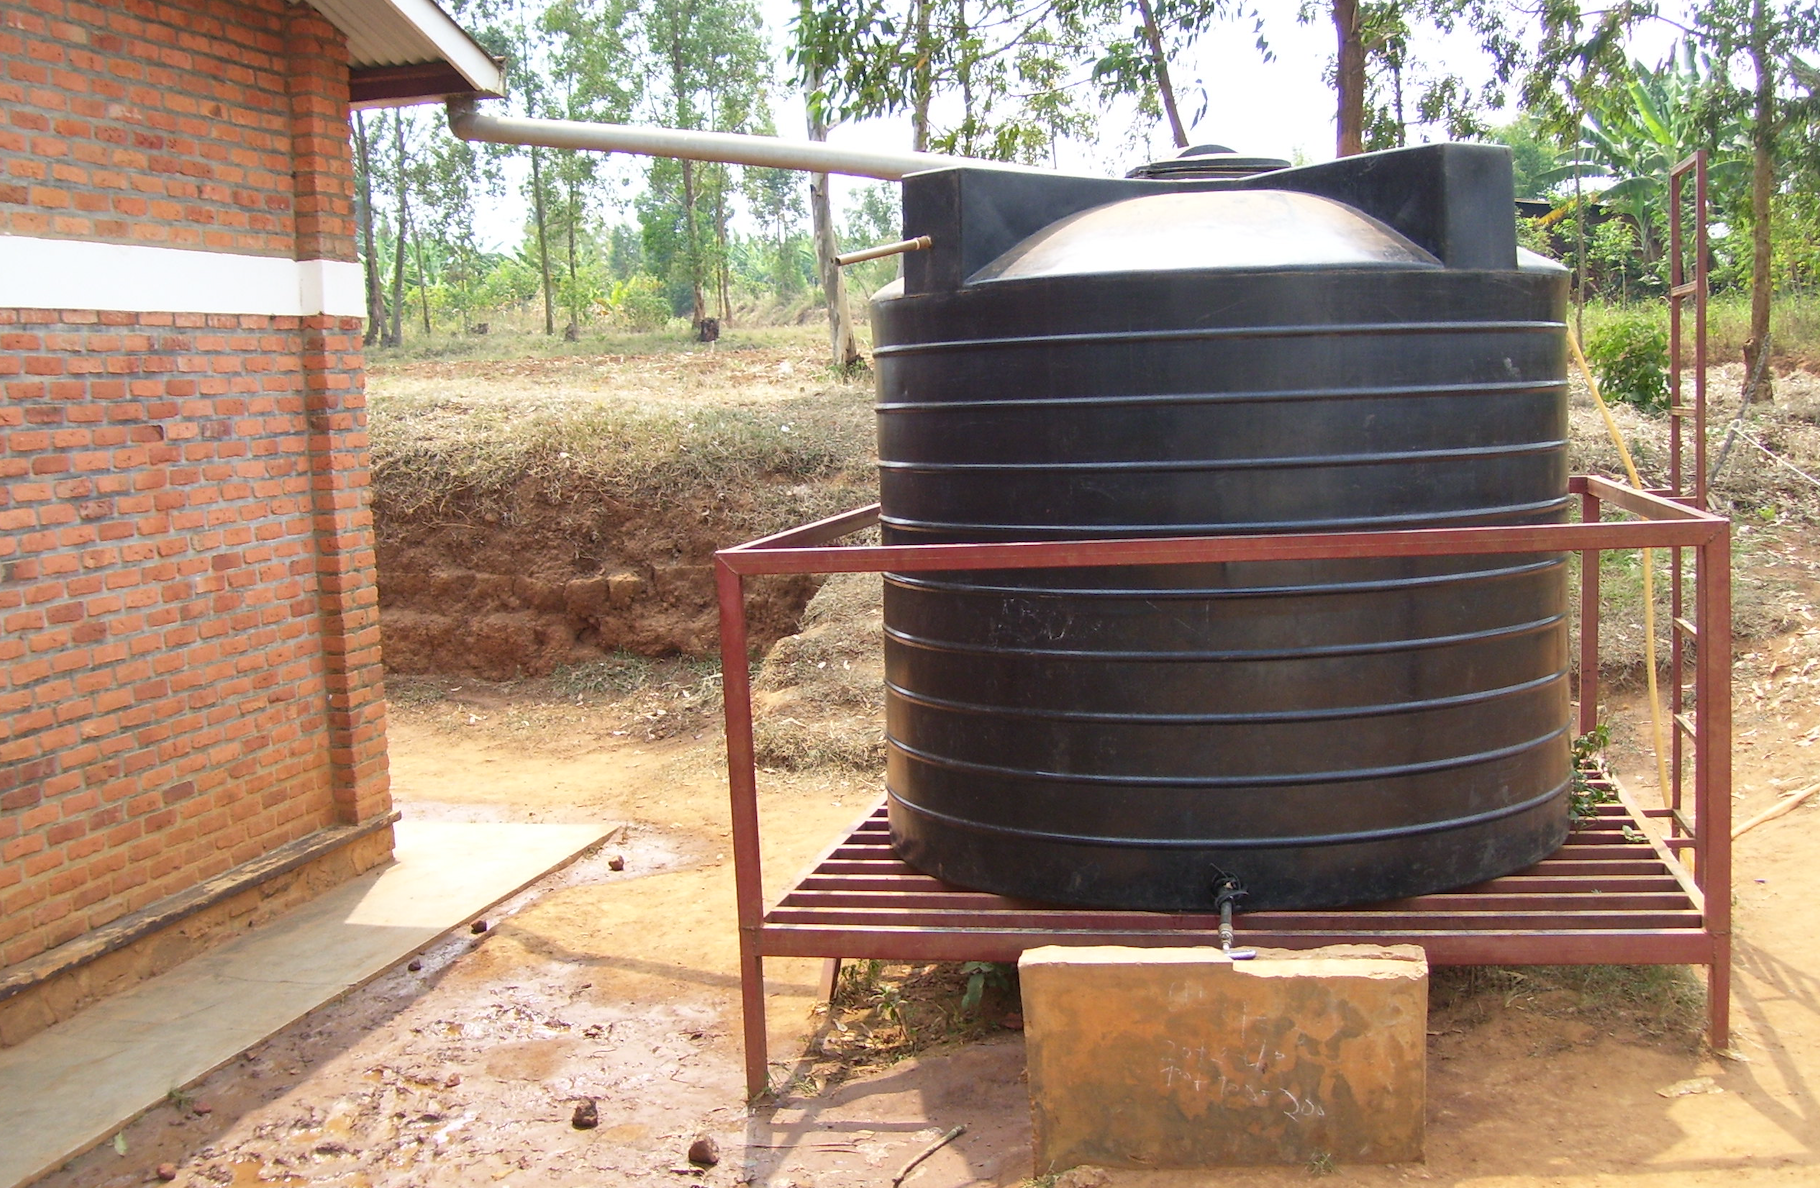 Rainwater Harvesting Tank in Rwanda. Photo Credit: C. Rieck (2011)/Sustainable Sanitation Alliance (SuSanA) Secretariat